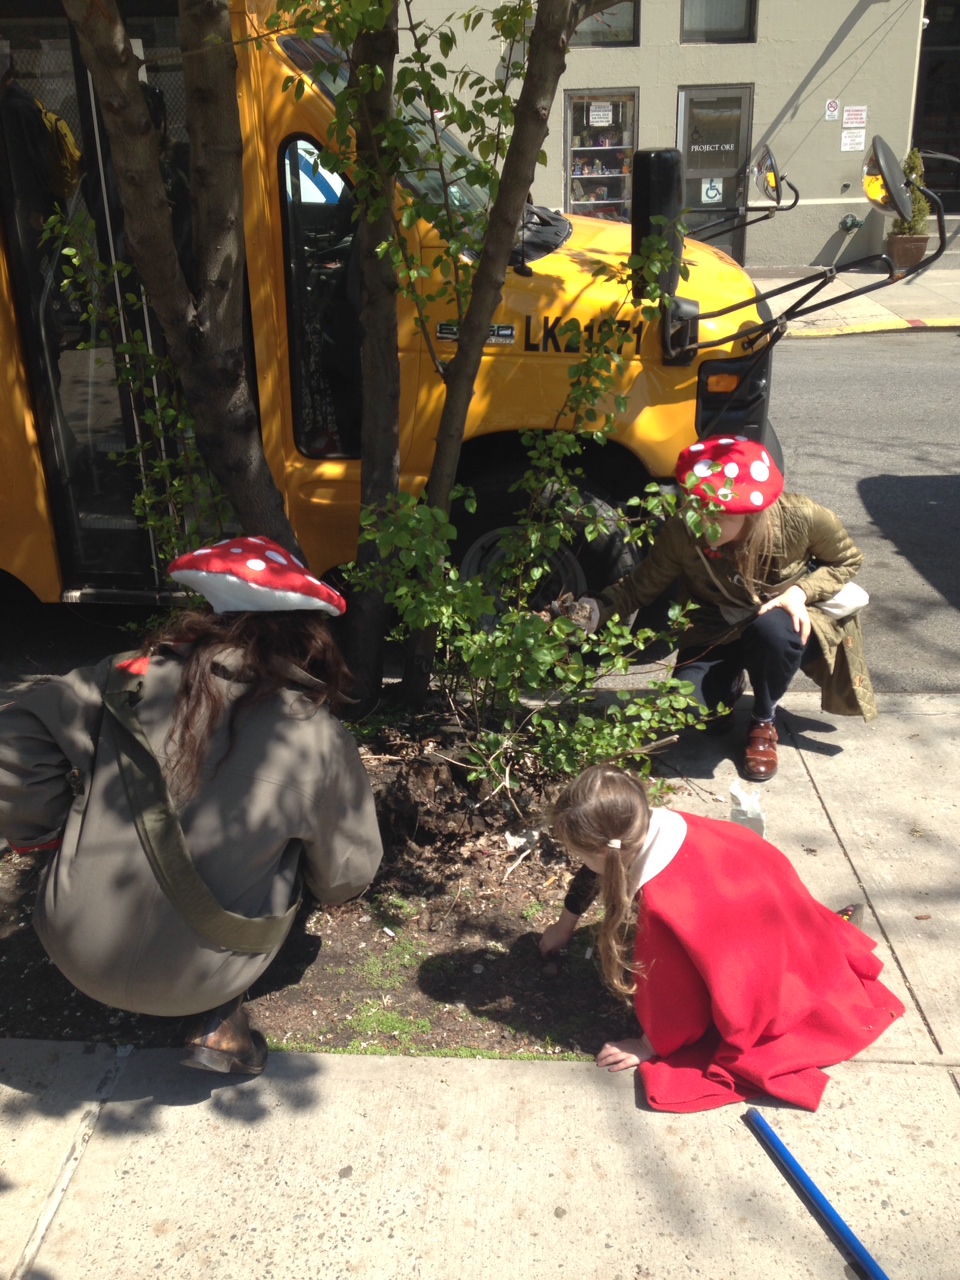 We made mushroom hats and seed bombs and cleaned up the neighborhood!